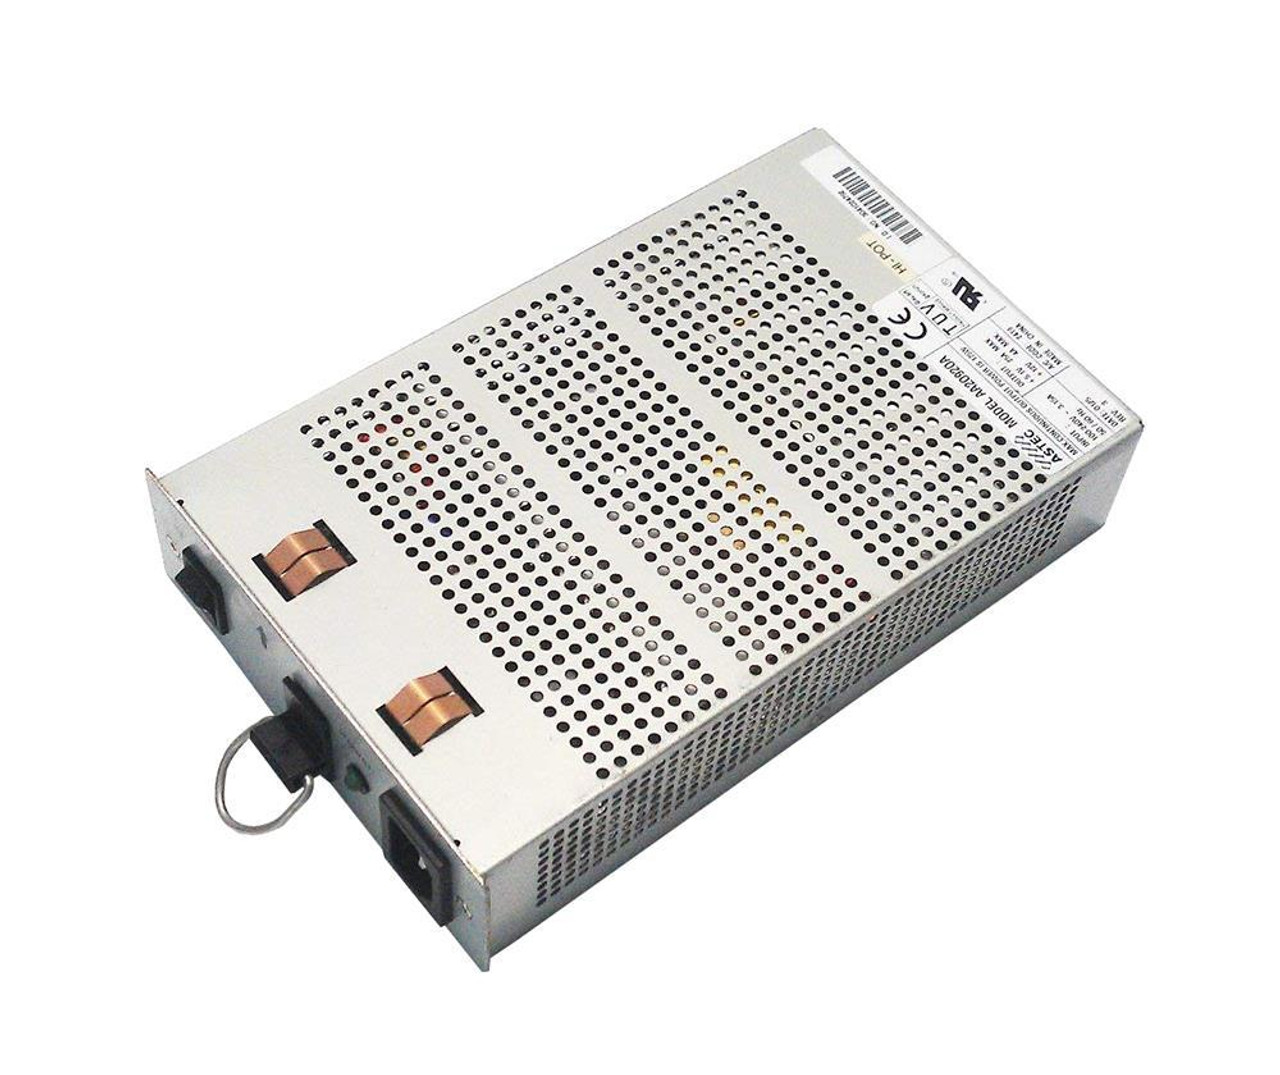 A5277-60008U HP Disk Array FC60 Power Supply